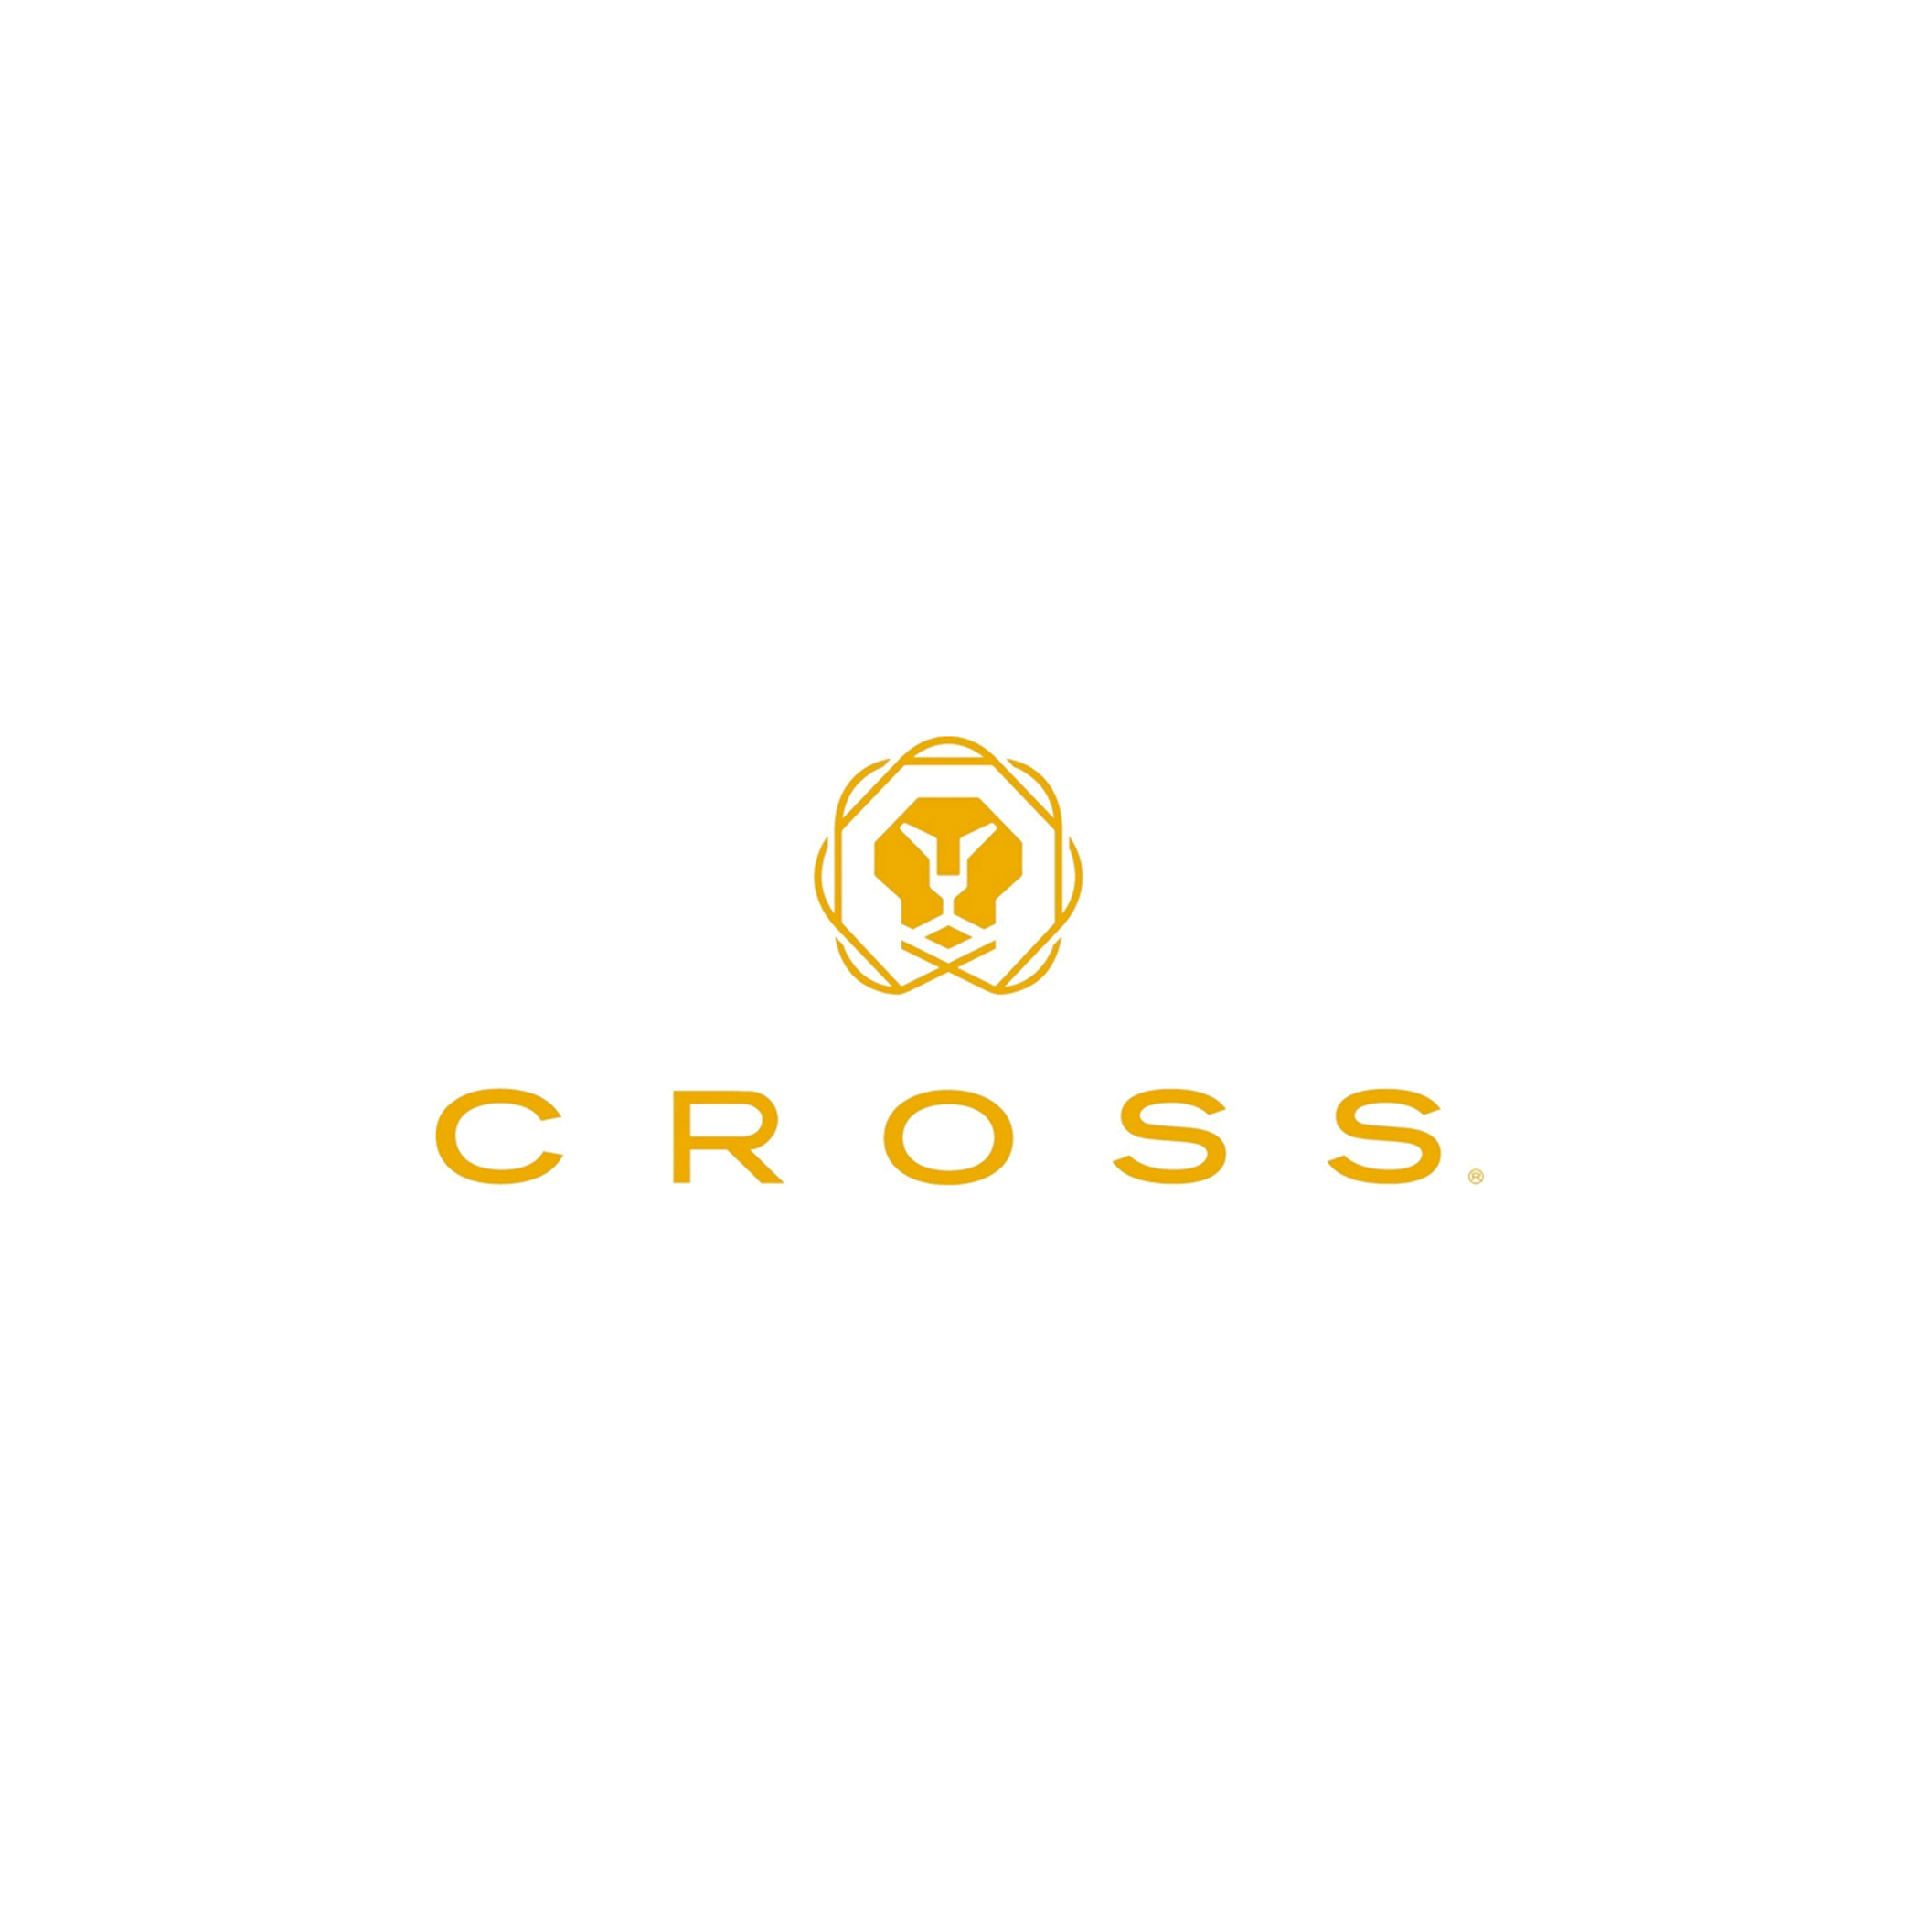 Product Brand: Cross